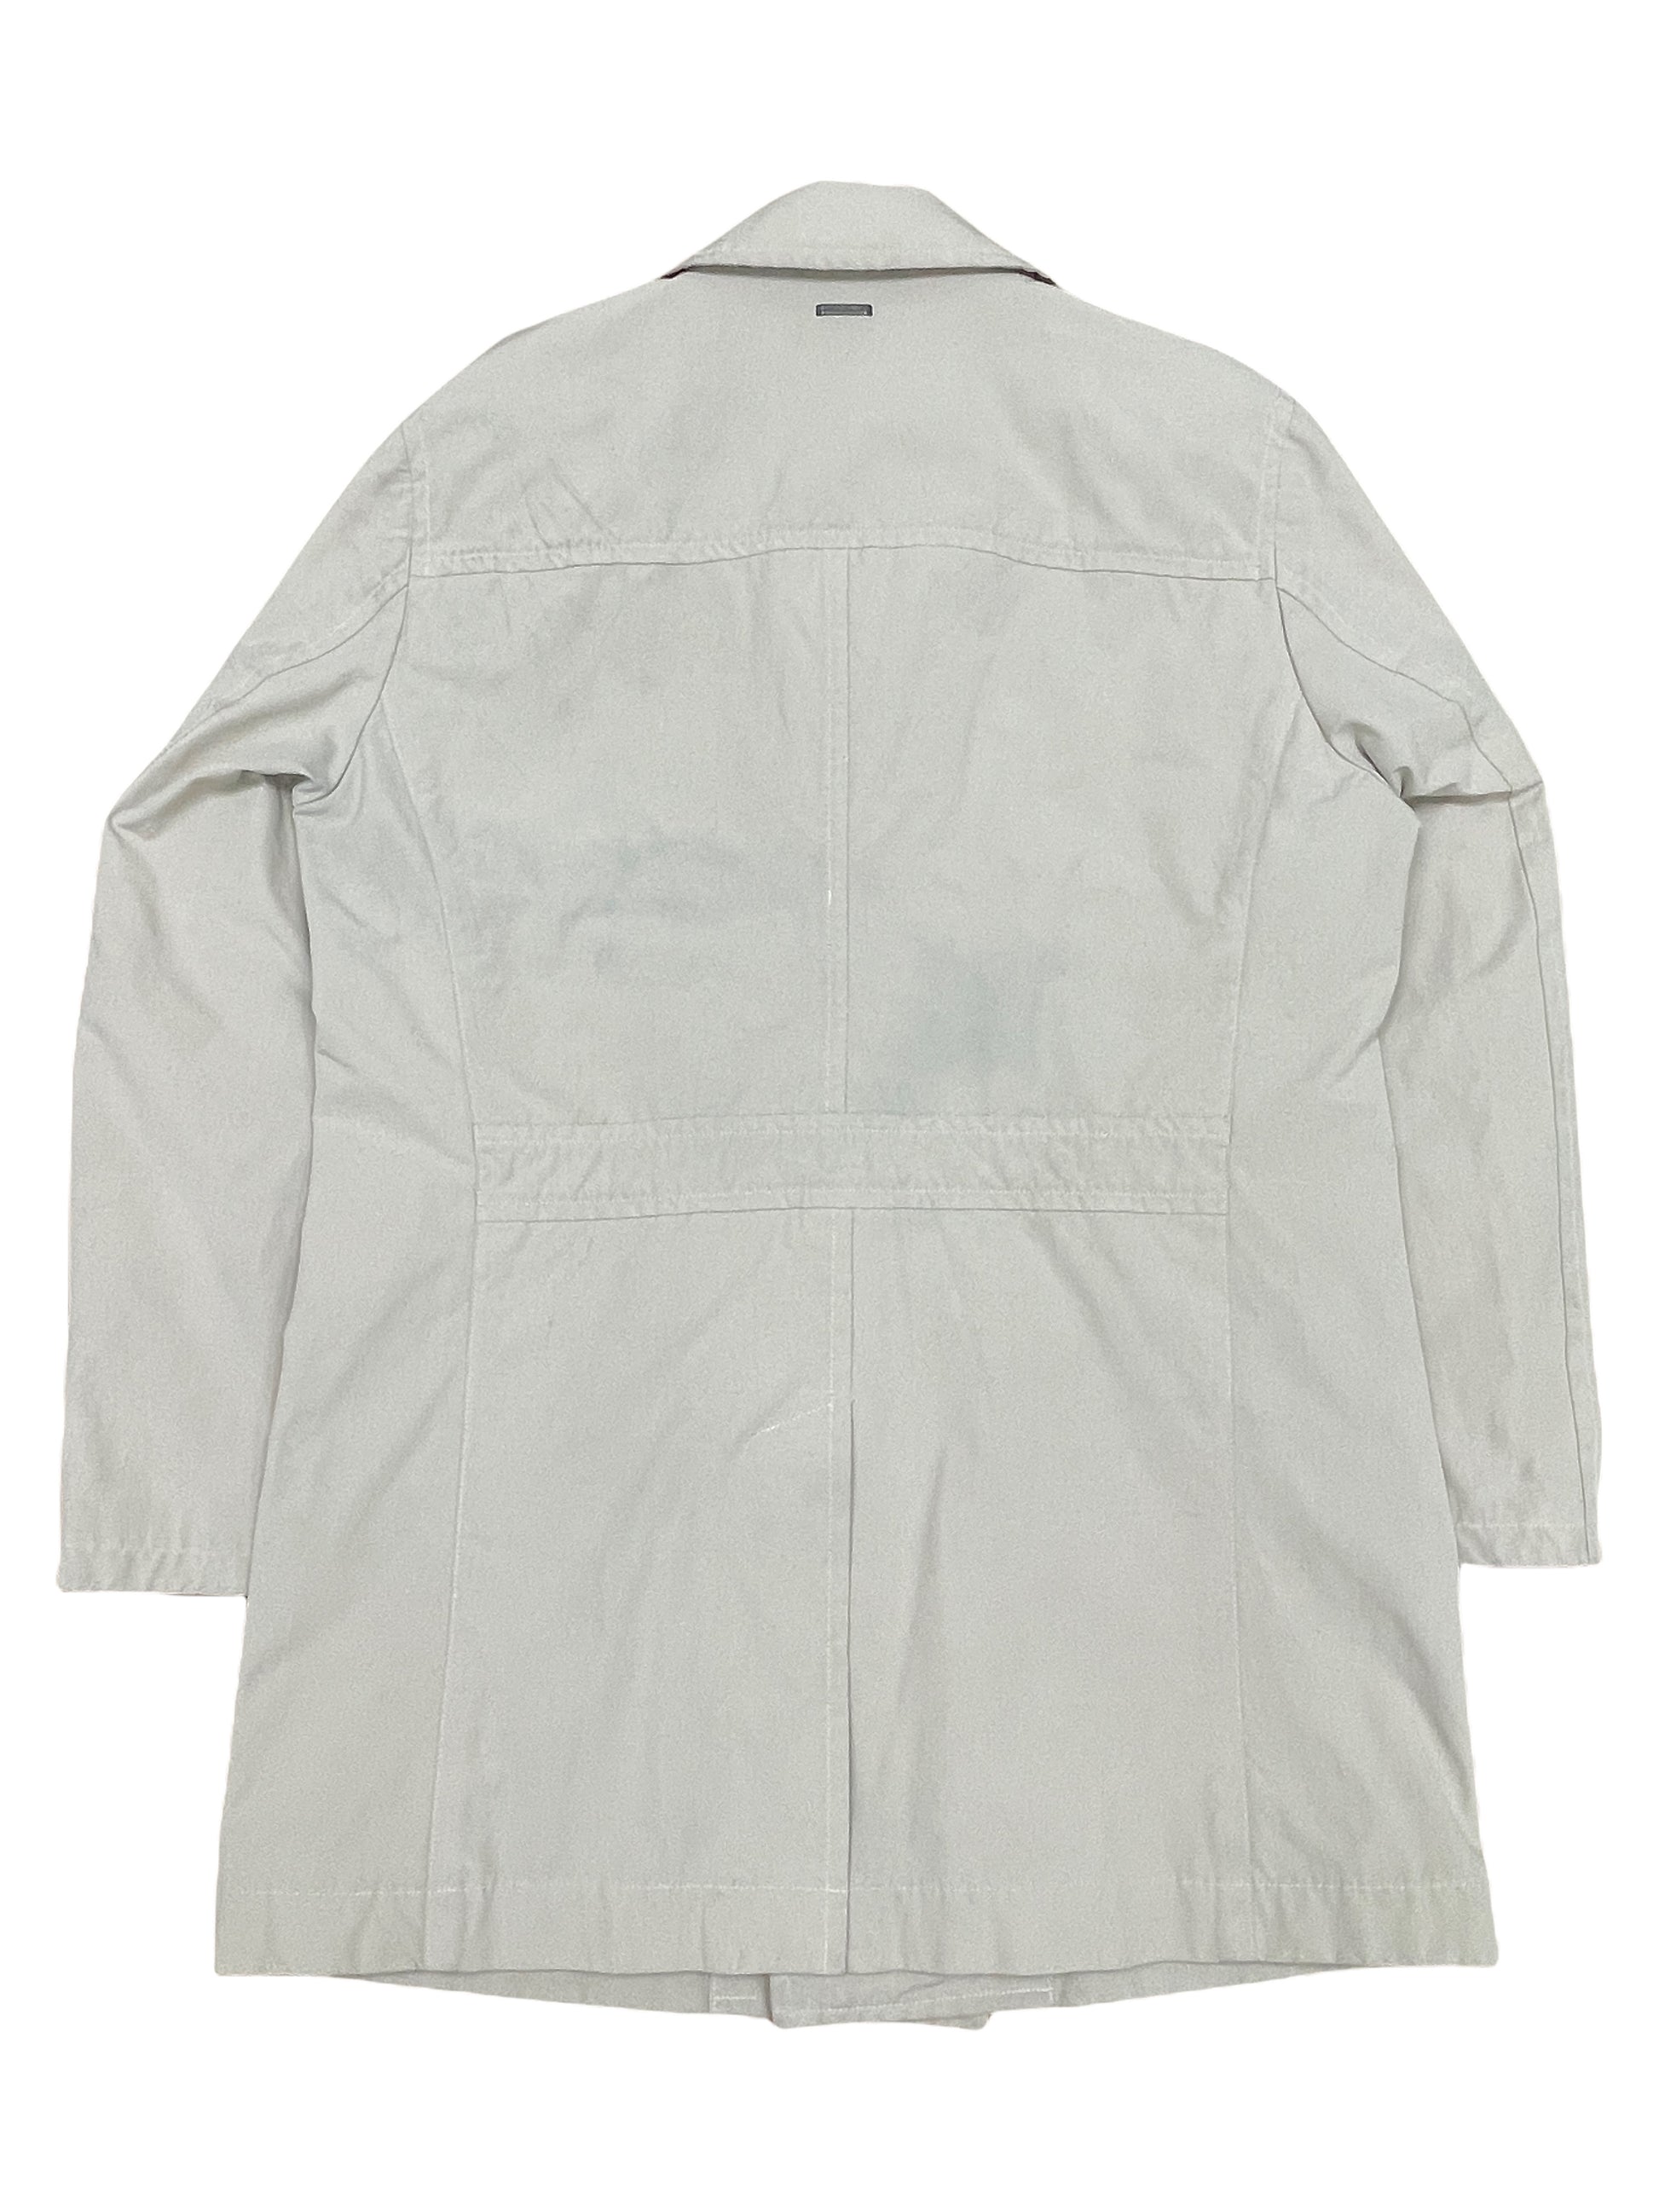 Michael Kors Tan Raincoat Trench Coat Medium - M